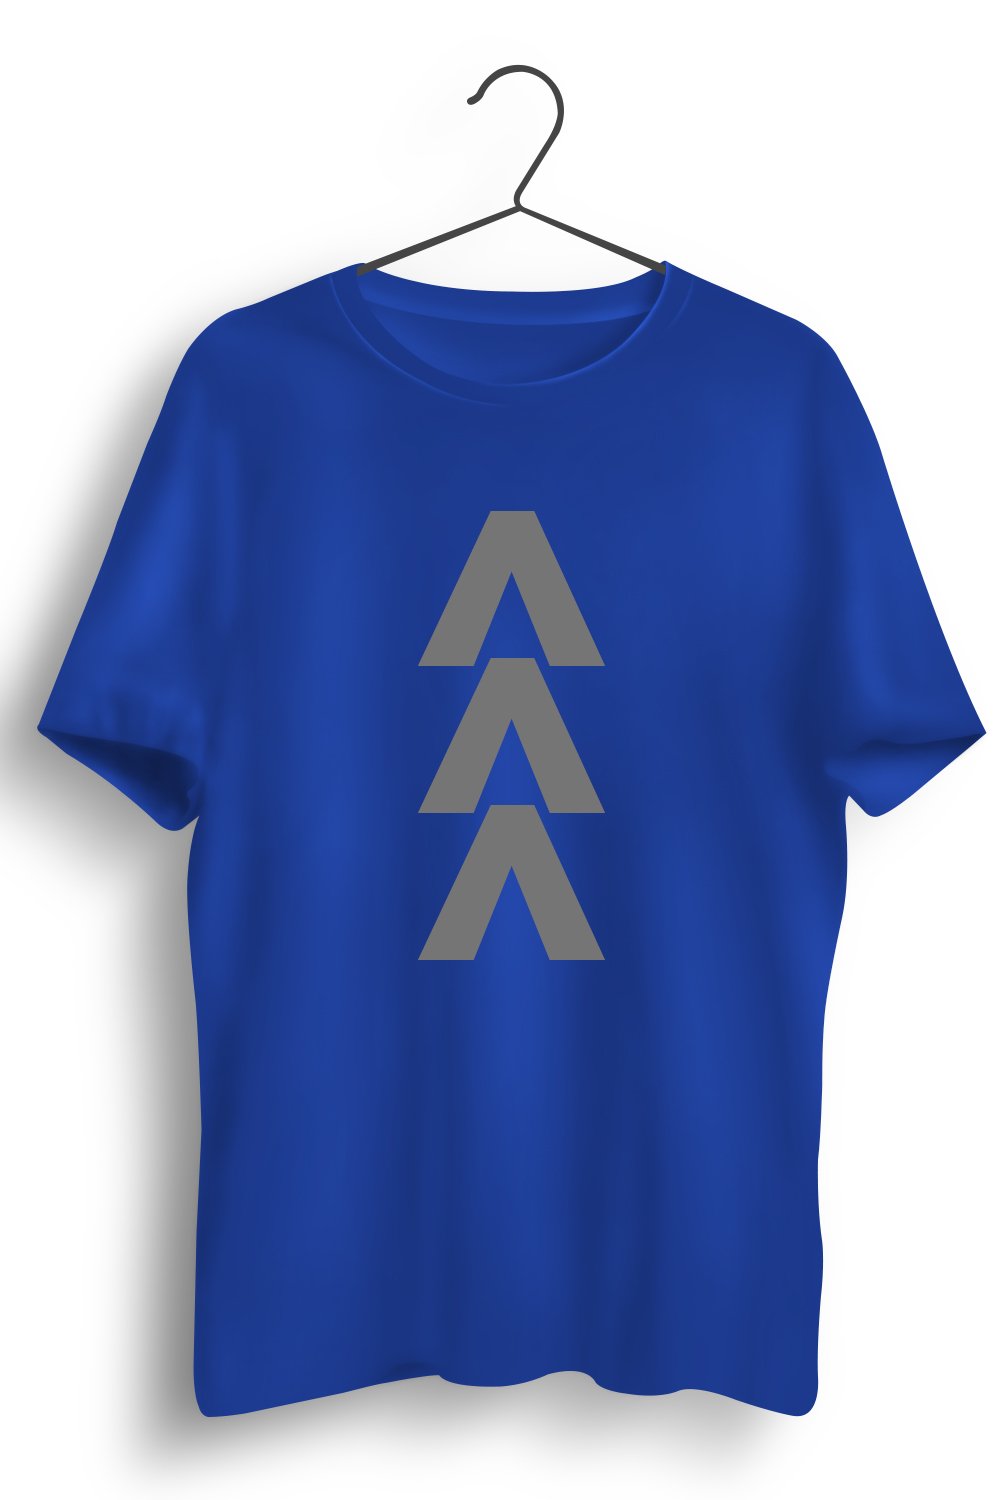 Arrow Up Reflective Print Blue Tshirt